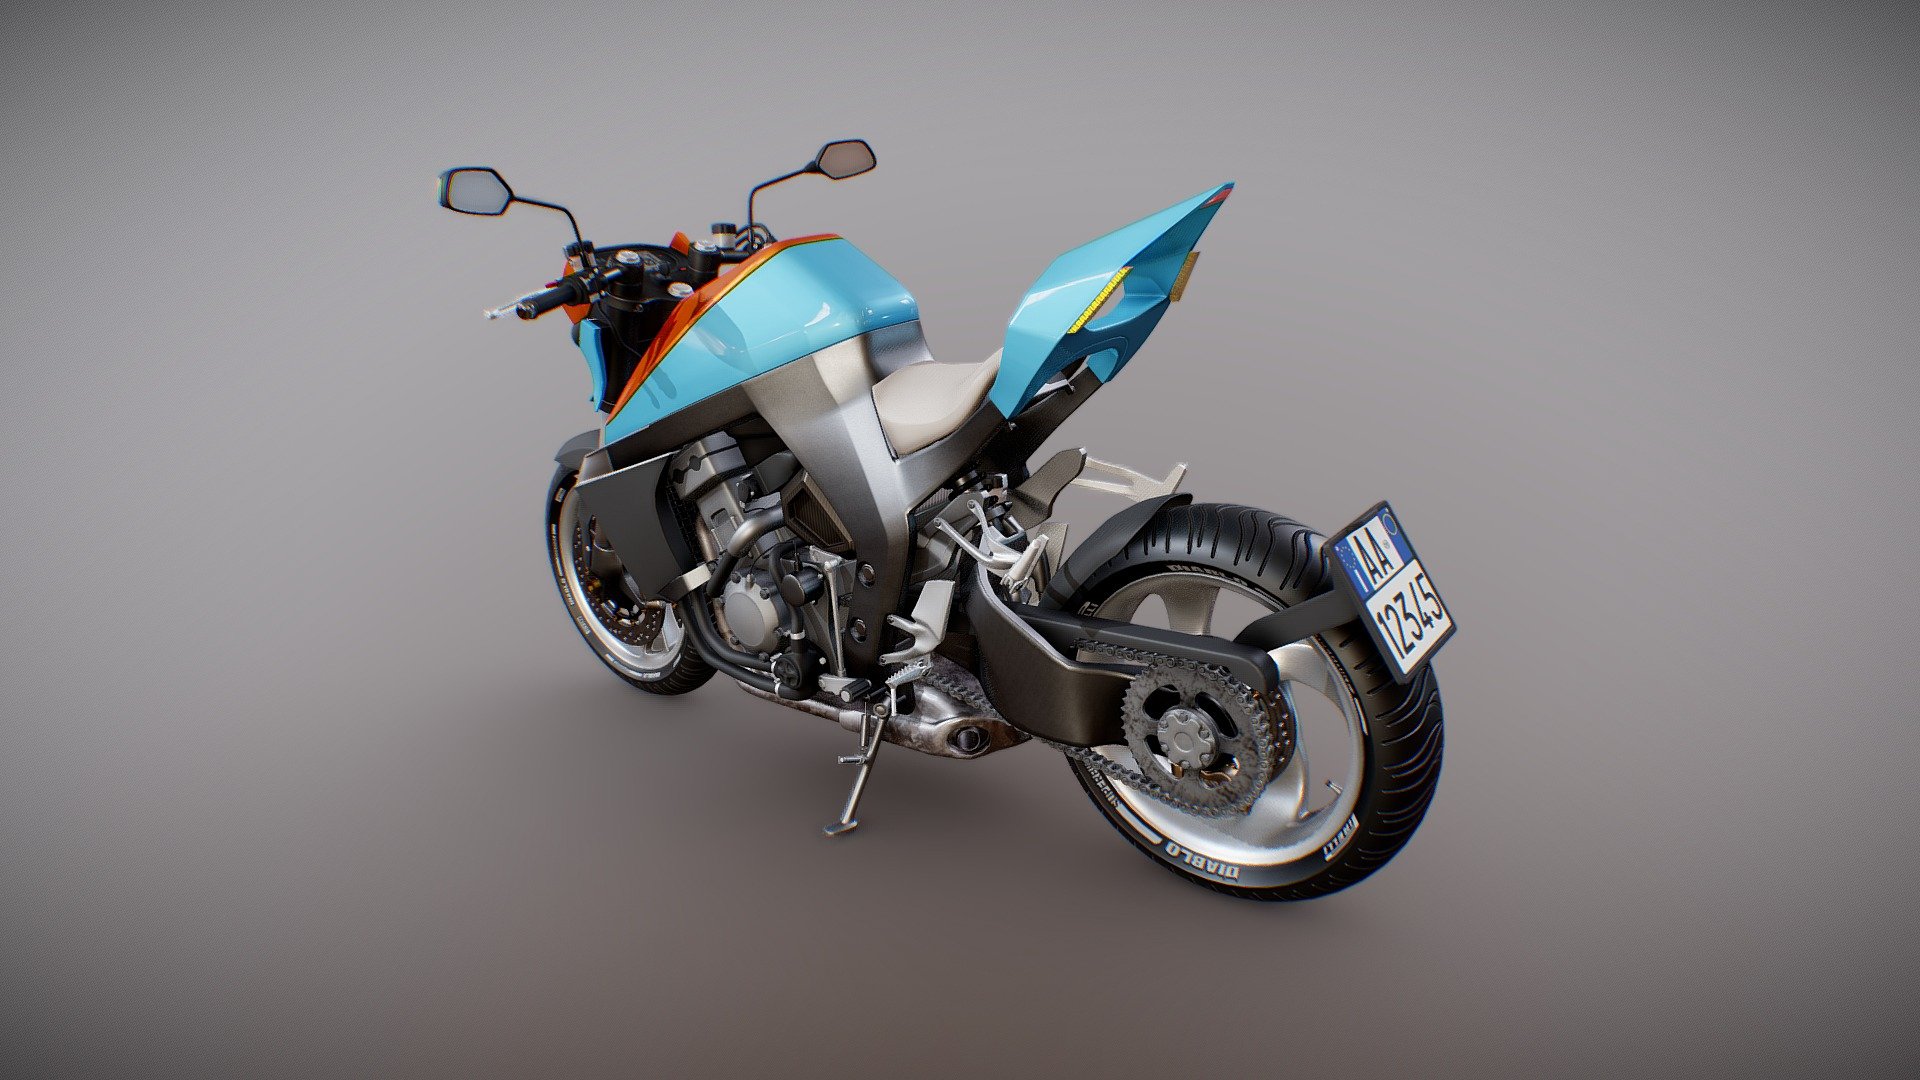 Desing di una motocicletta sulla base di una Honda CB1000R

Motorcycle design based on a Honda CB1000R - Moto design - Buy Royalty Free 3D model by Andrea Costi (@andreacosti) 3d model